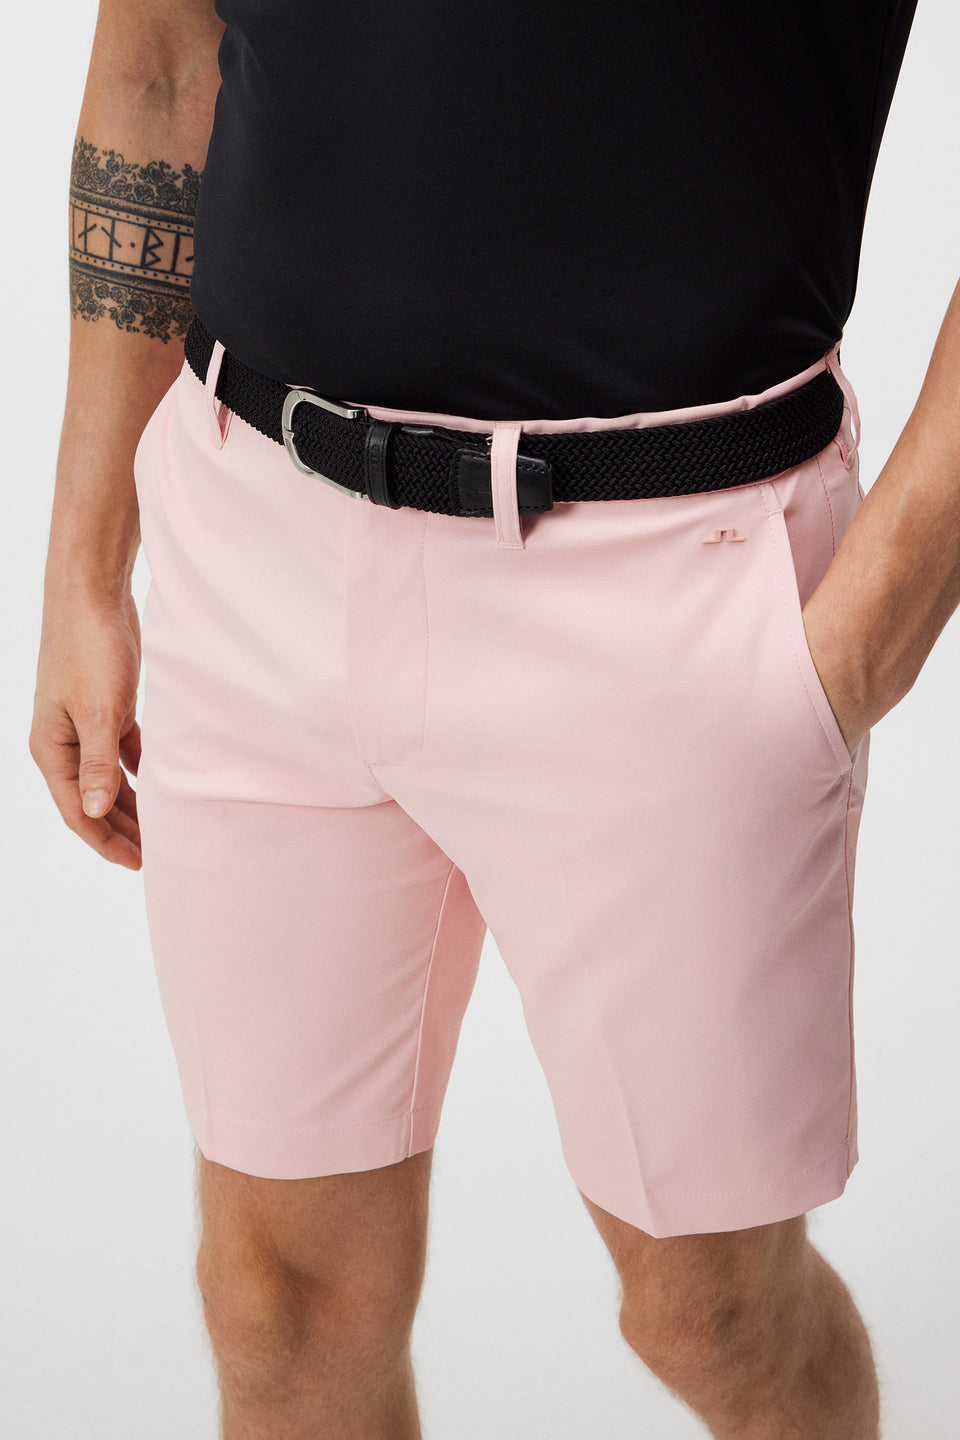 Eloy Shorts / Powder Pink